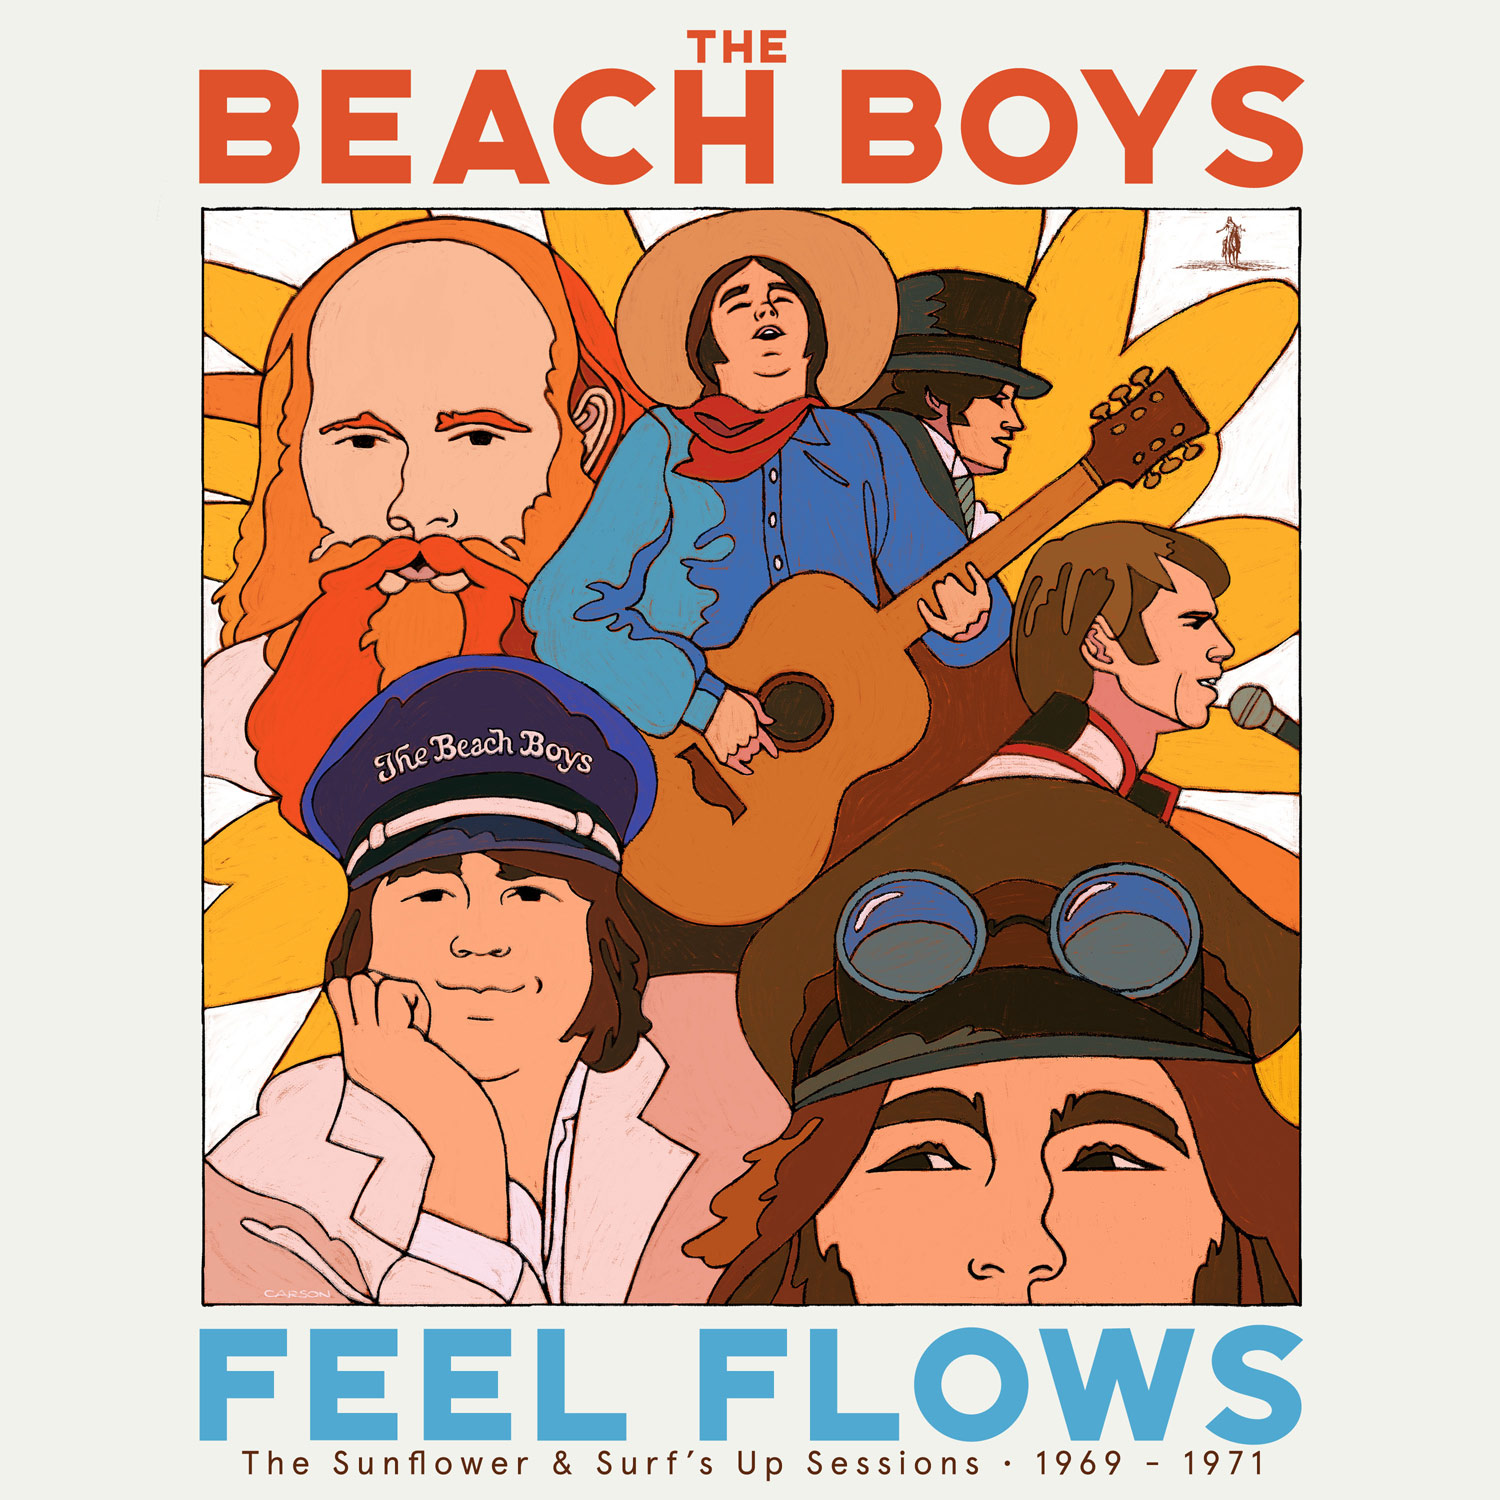 The Beach Boys / Feel Flows: The Sunflower & Surfs Up Sessions